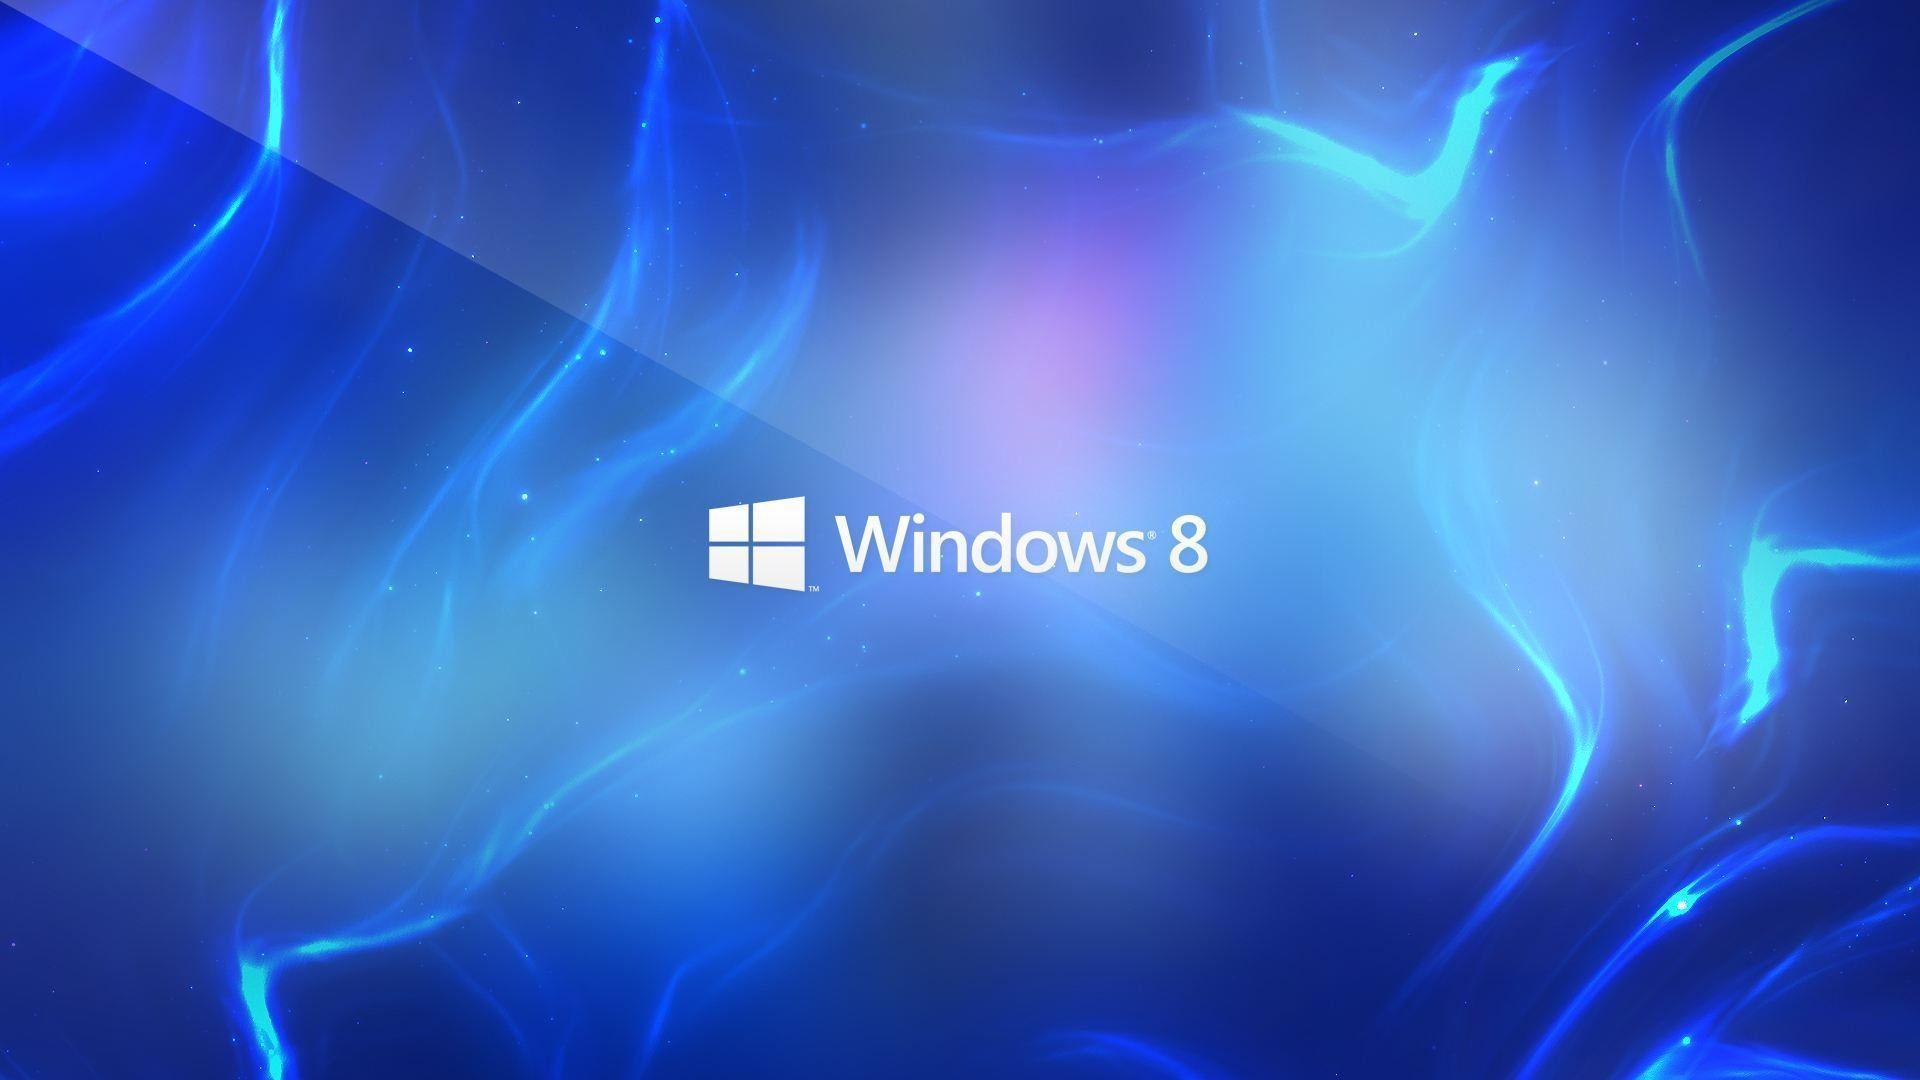 Wallpaper For > Windows 8 Wallpaper HD 3D For Desktop Blue